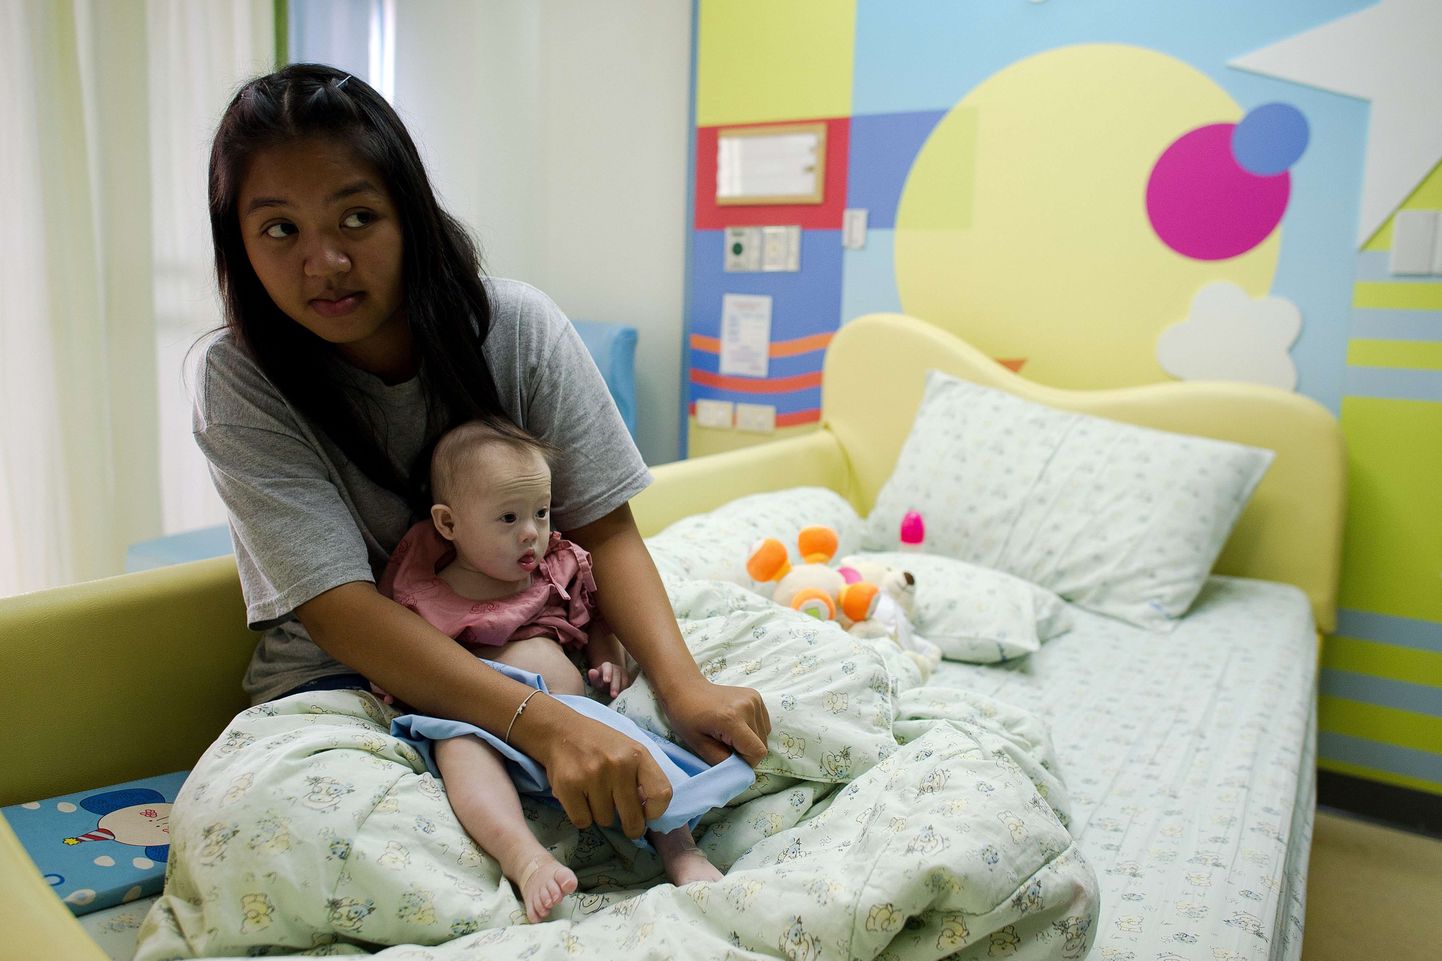 Tailannast surrogaatema Pattaramon Chanbua koos väikse Gammyga Chonburi provintsis asuvas Samitivej haiglas.